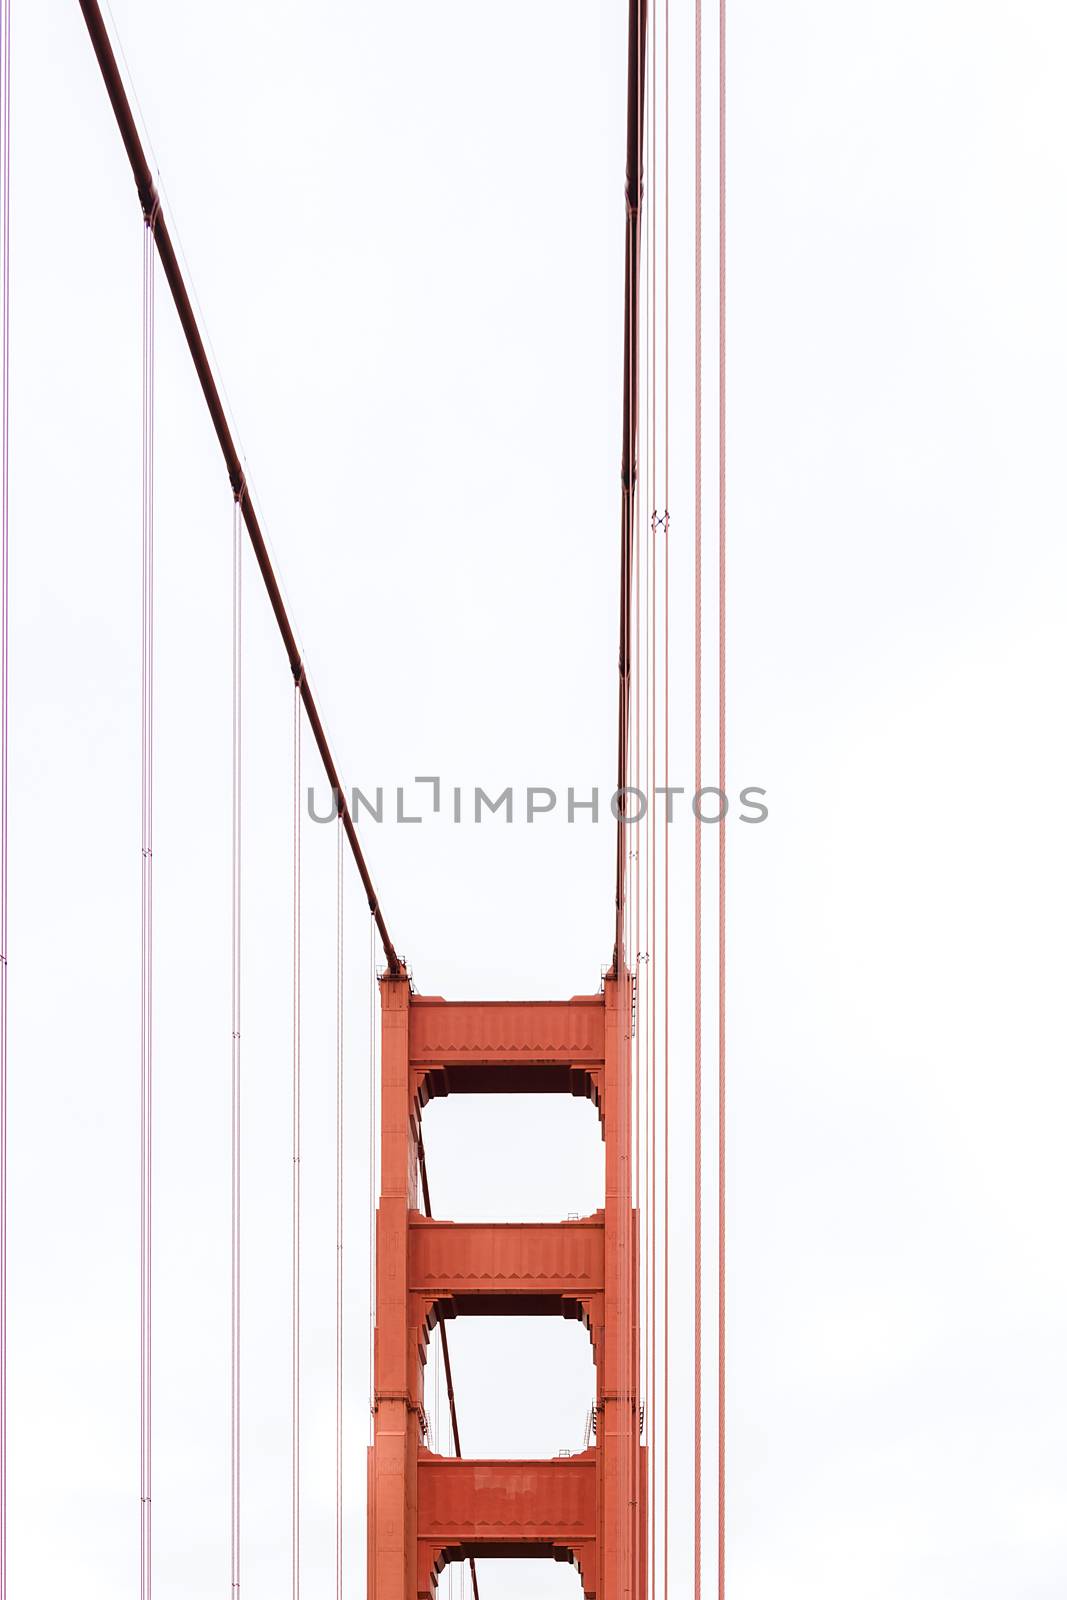 Isolated Golden Gate Bridge pillar on white background